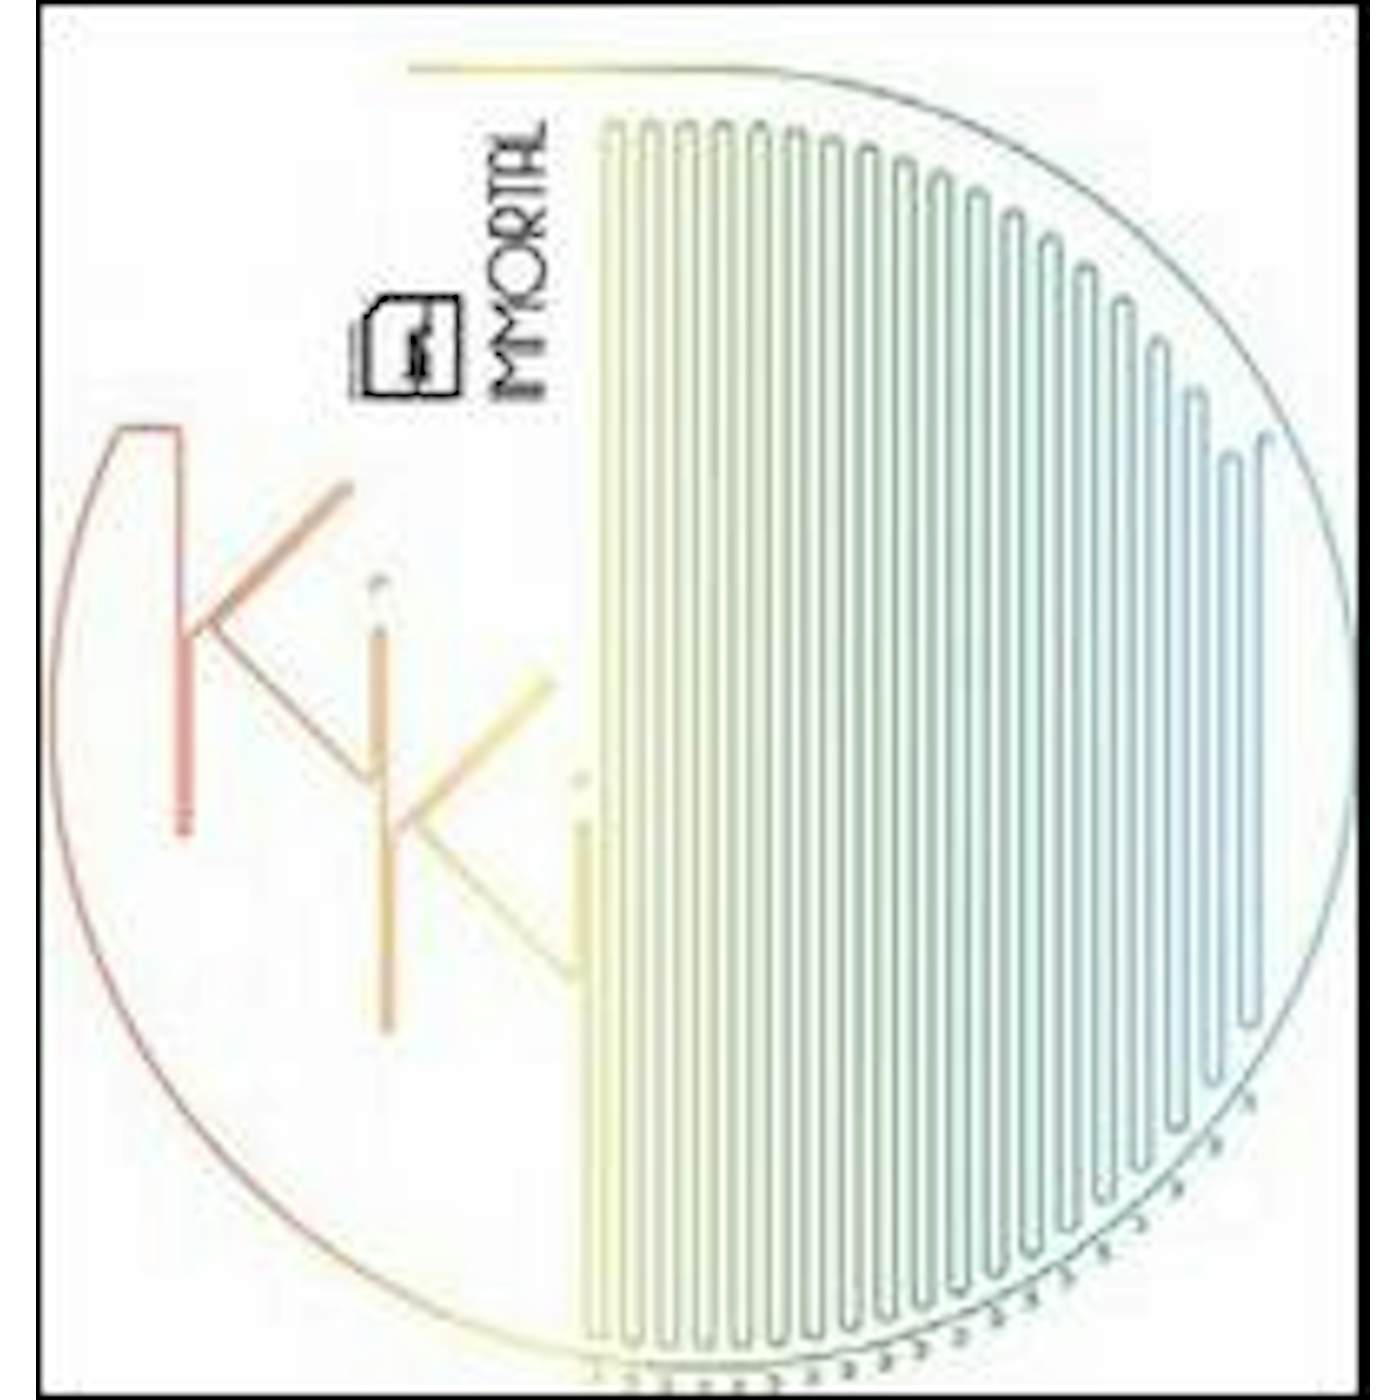 KIKI Immortal Vinyl Record